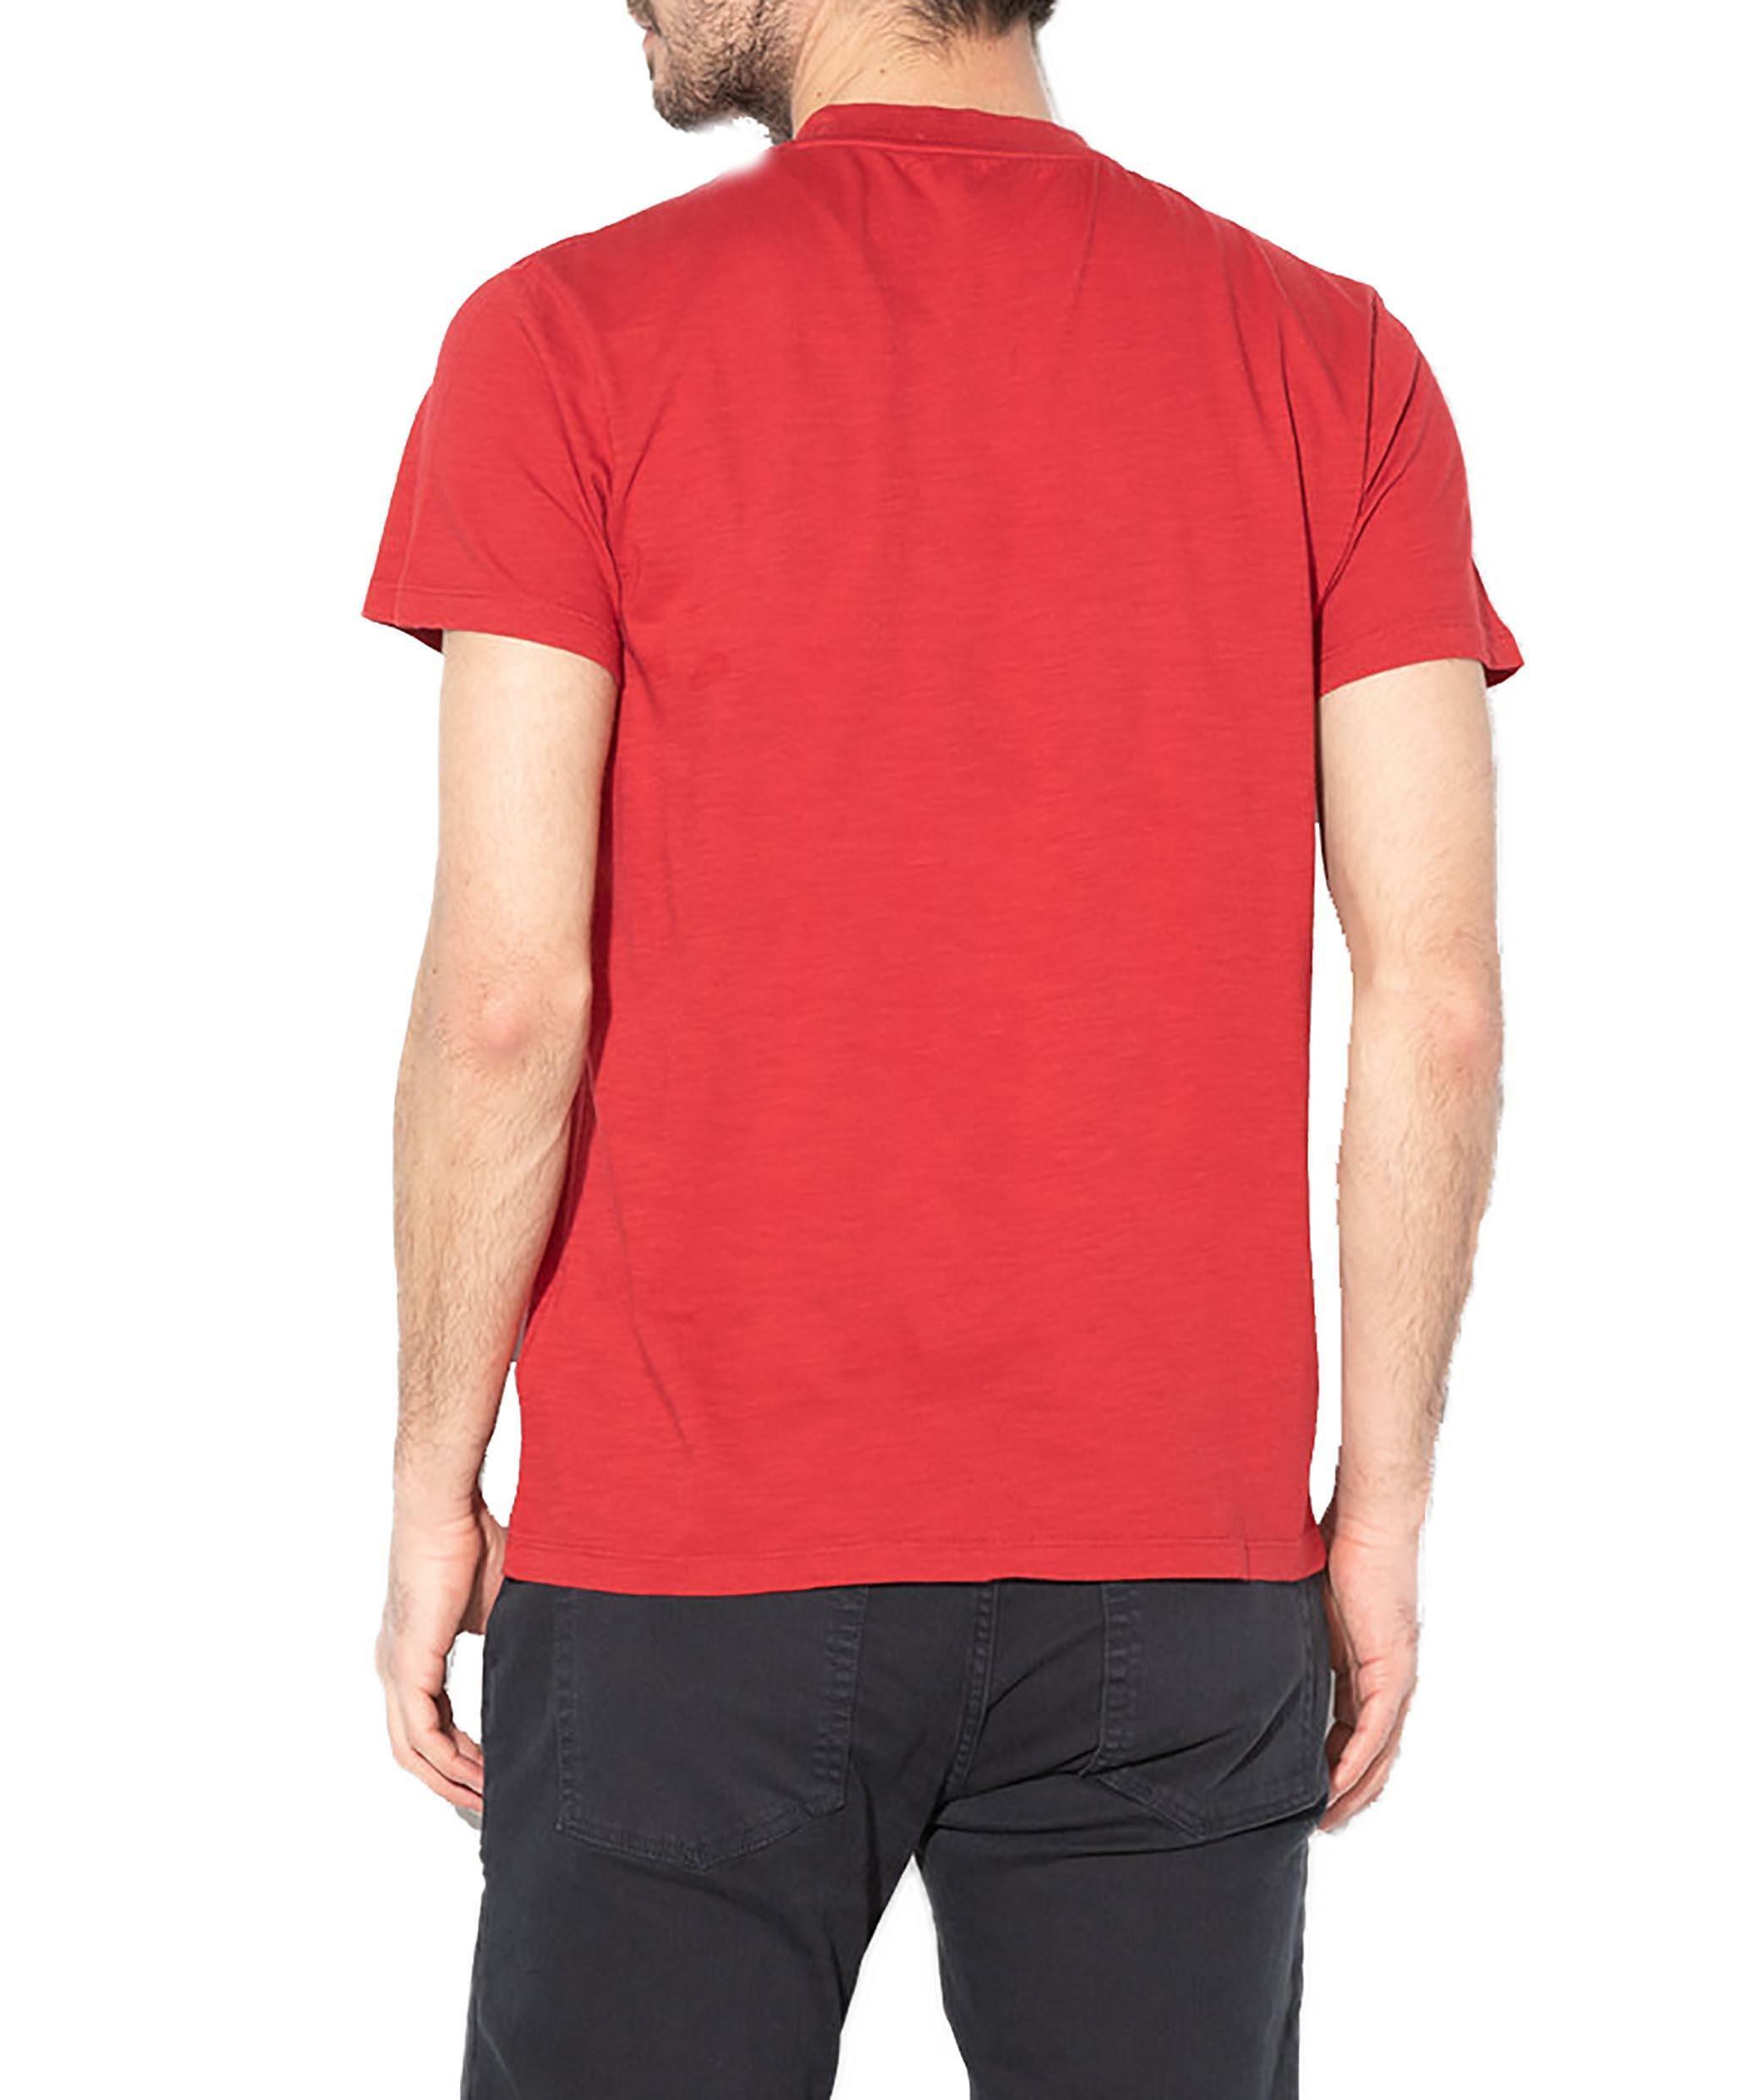 timberland timberland vintage inspired t-shirt uomo rossa a1ocxr09